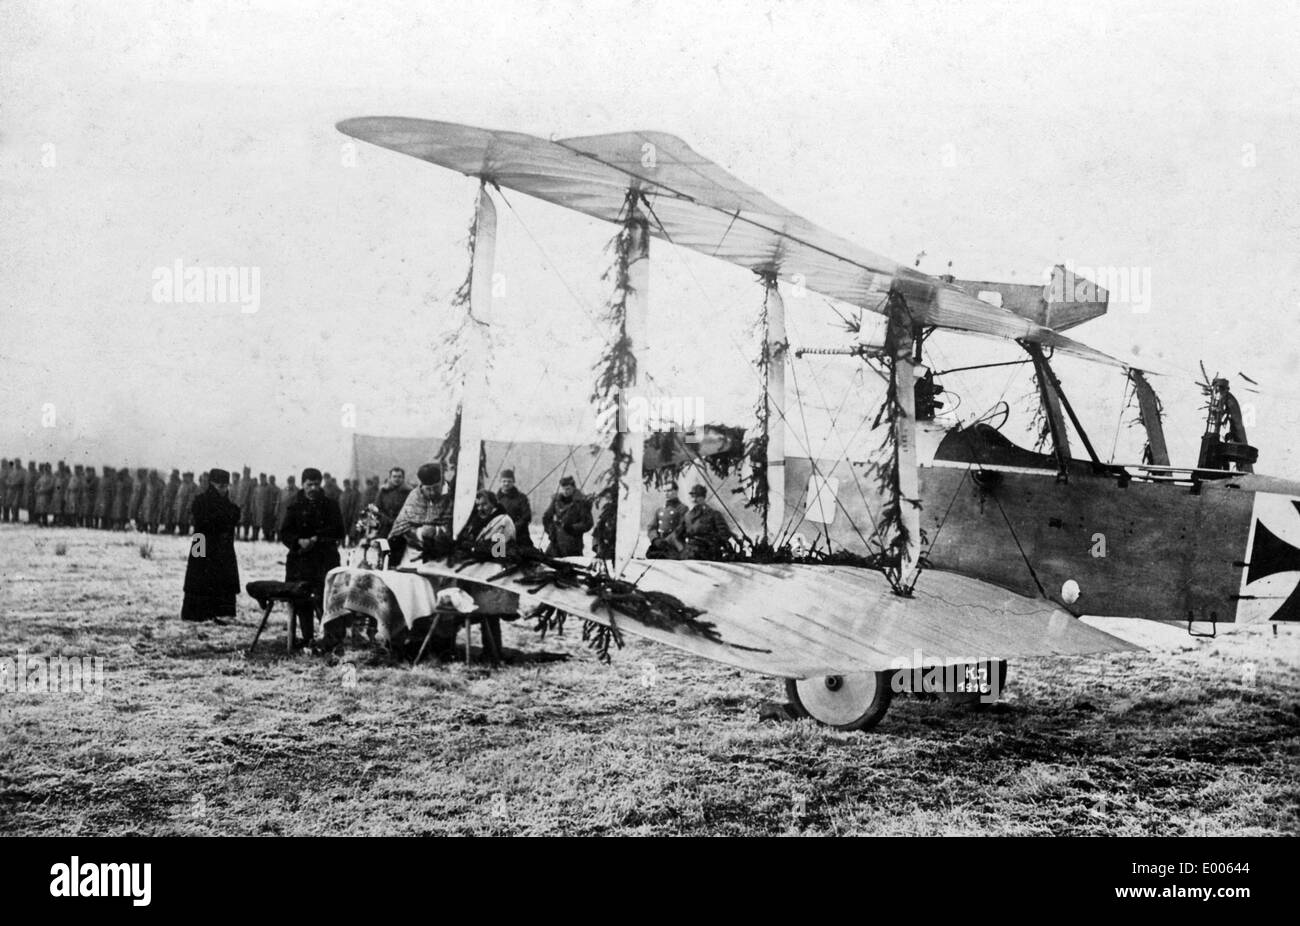 Austria-Hungary pilots in World War I, 1916 Stock Photo